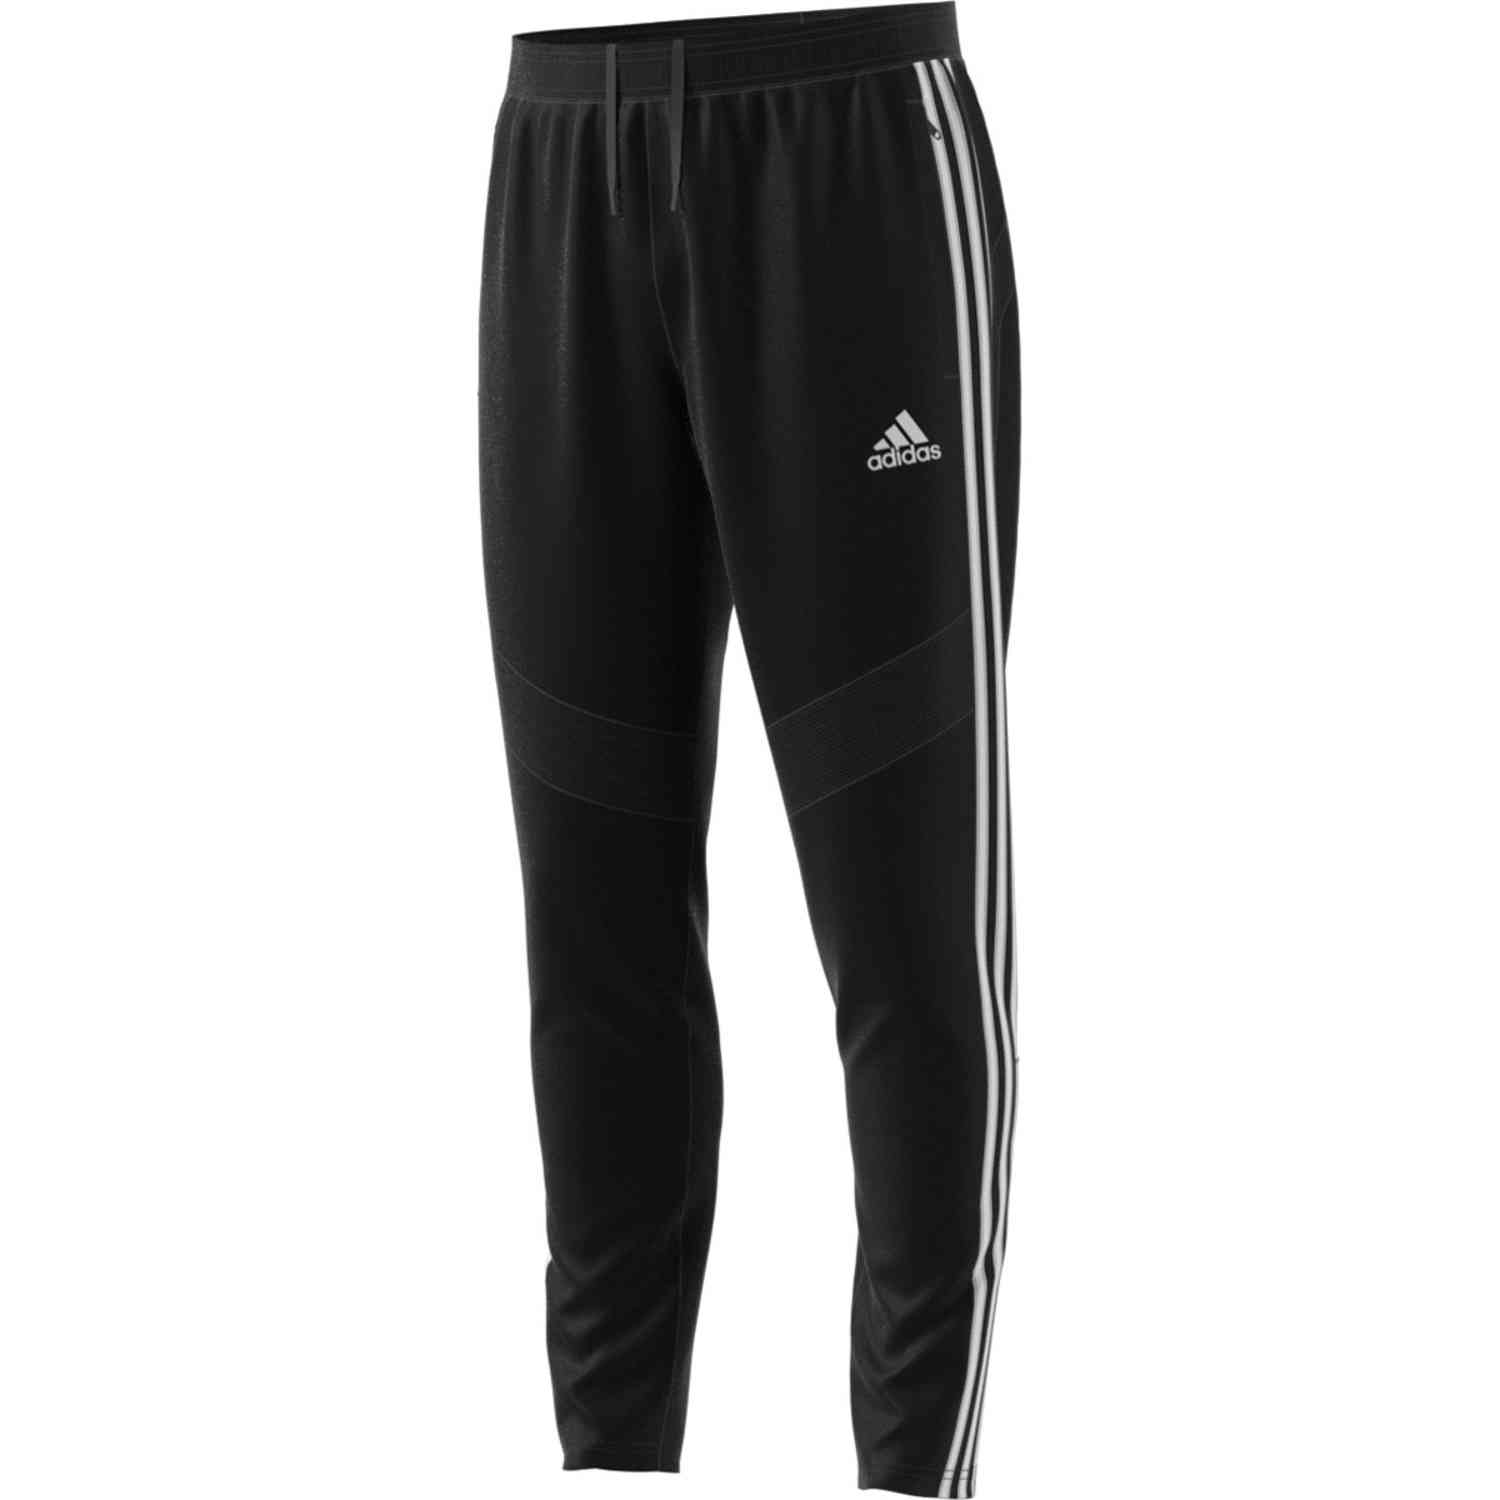 adidas Tiro 19 Warm Training Pants - Black/White - SoccerPro